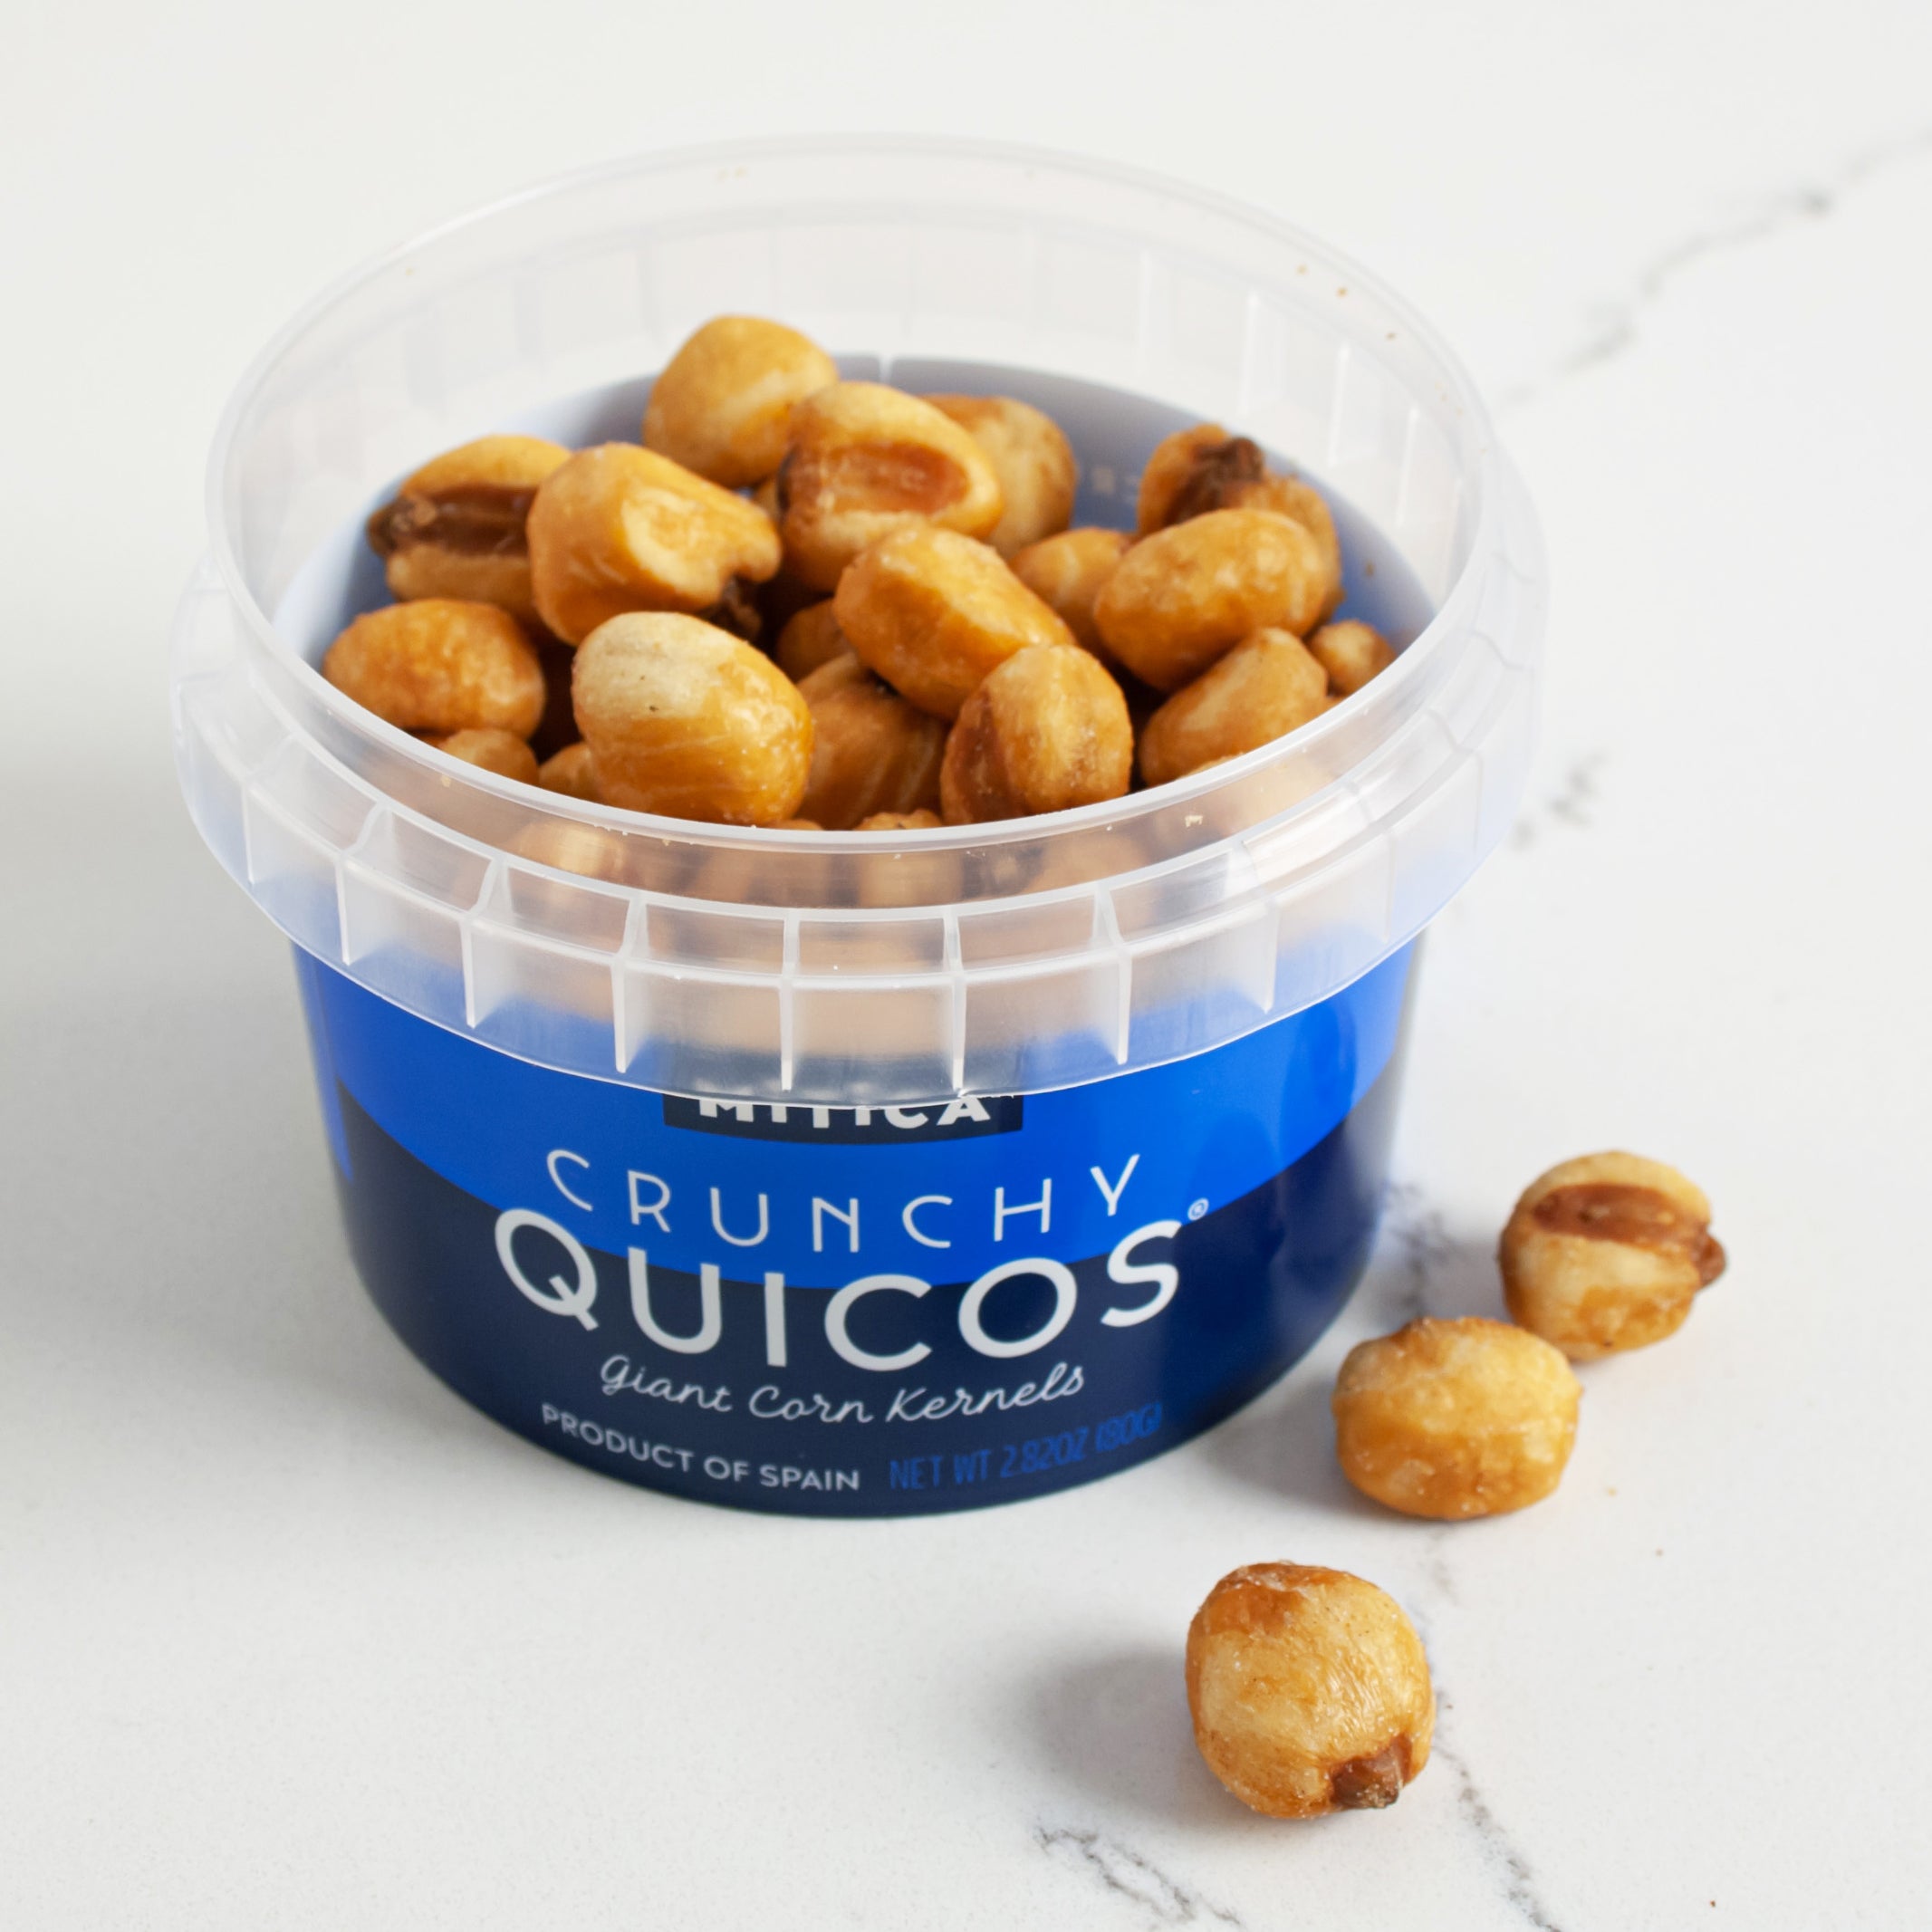 Quicos Crunchy Corn from Spain - igourmet